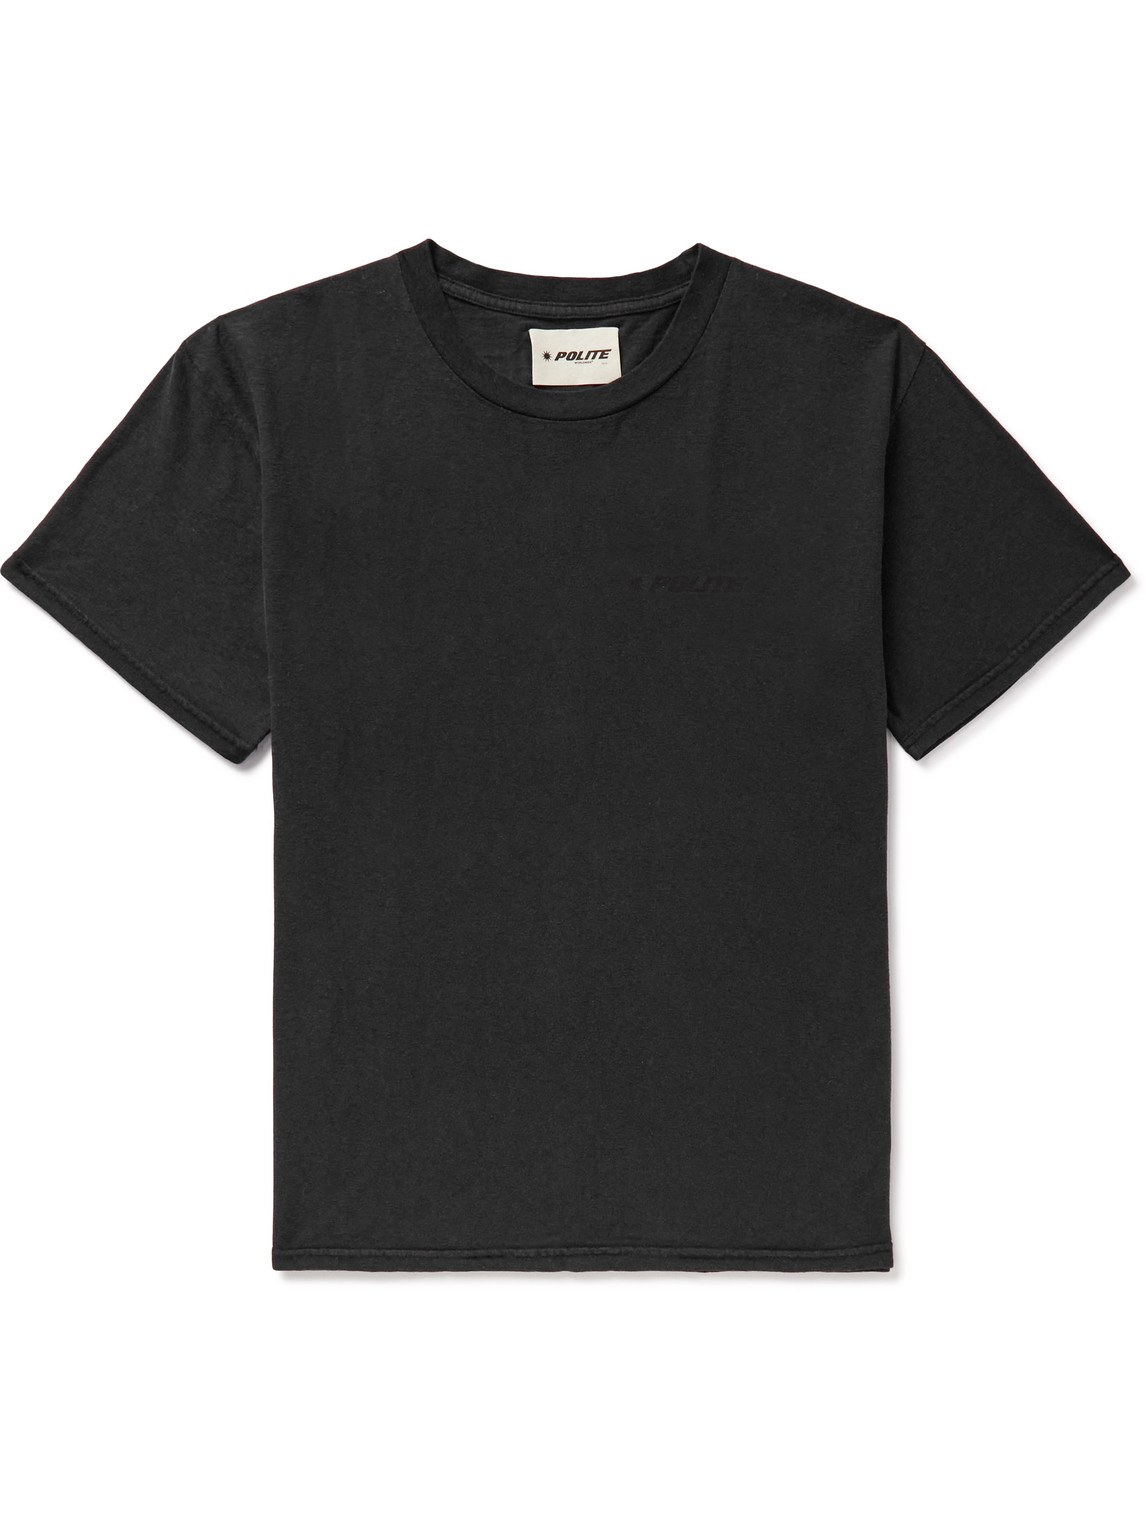 ® Printed Cotton-Jersey T-Shirt